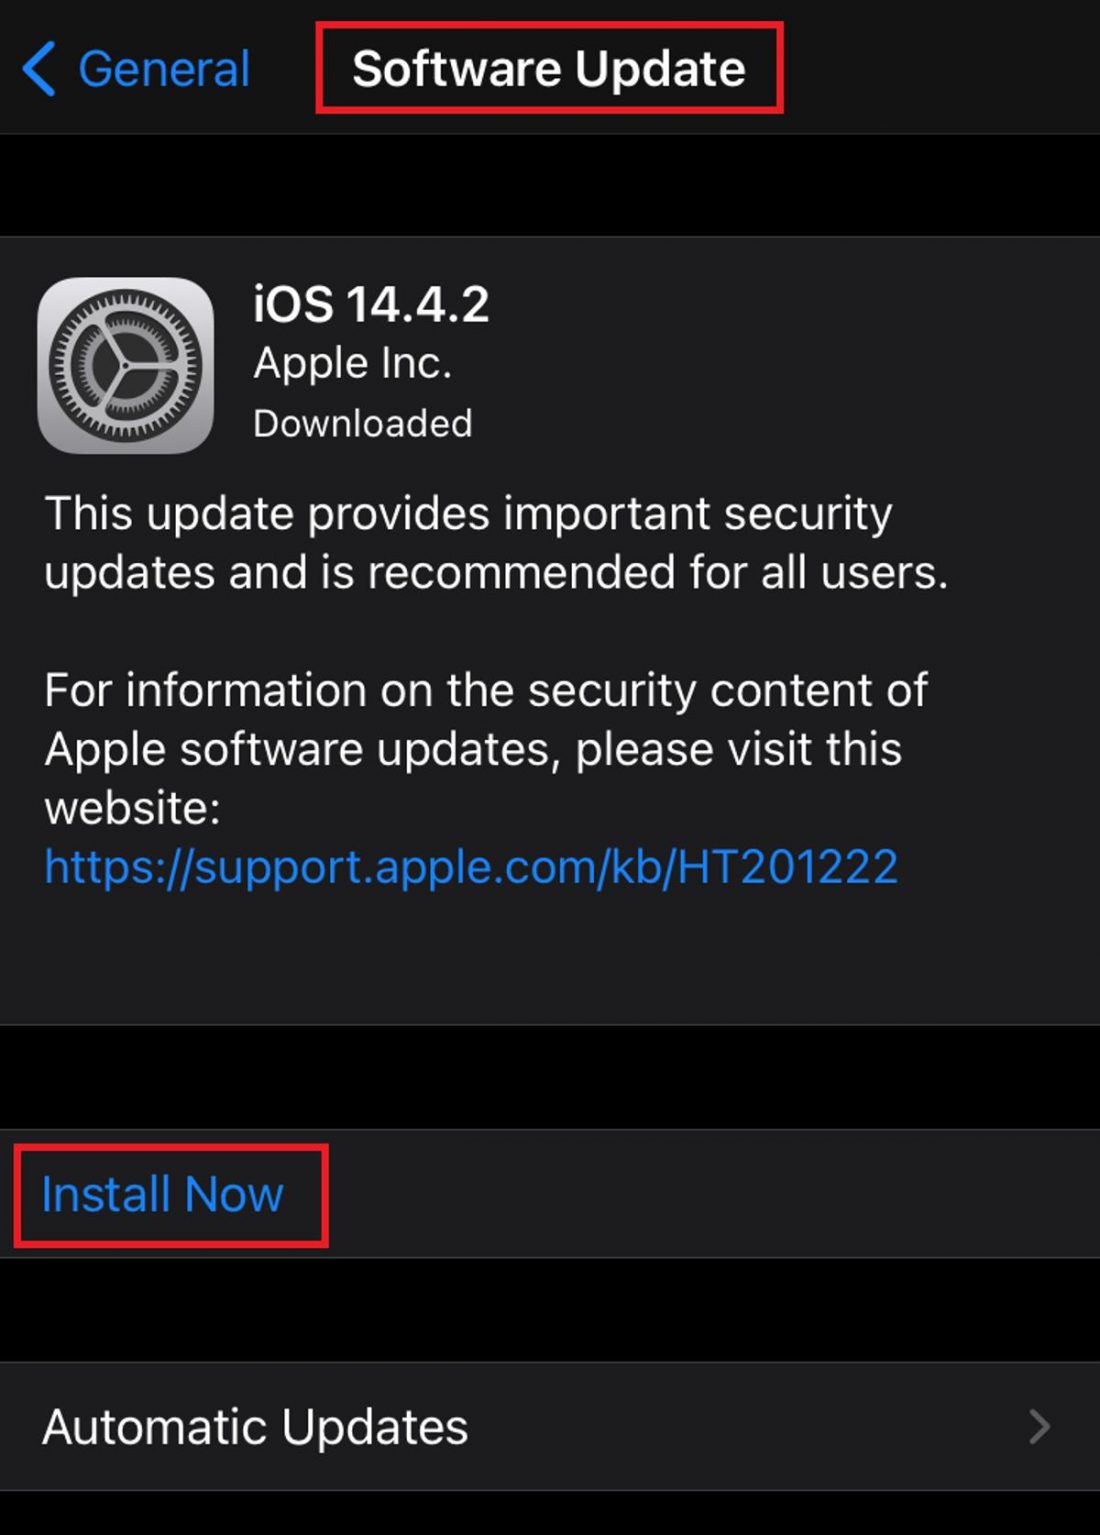 iOS - Install Now